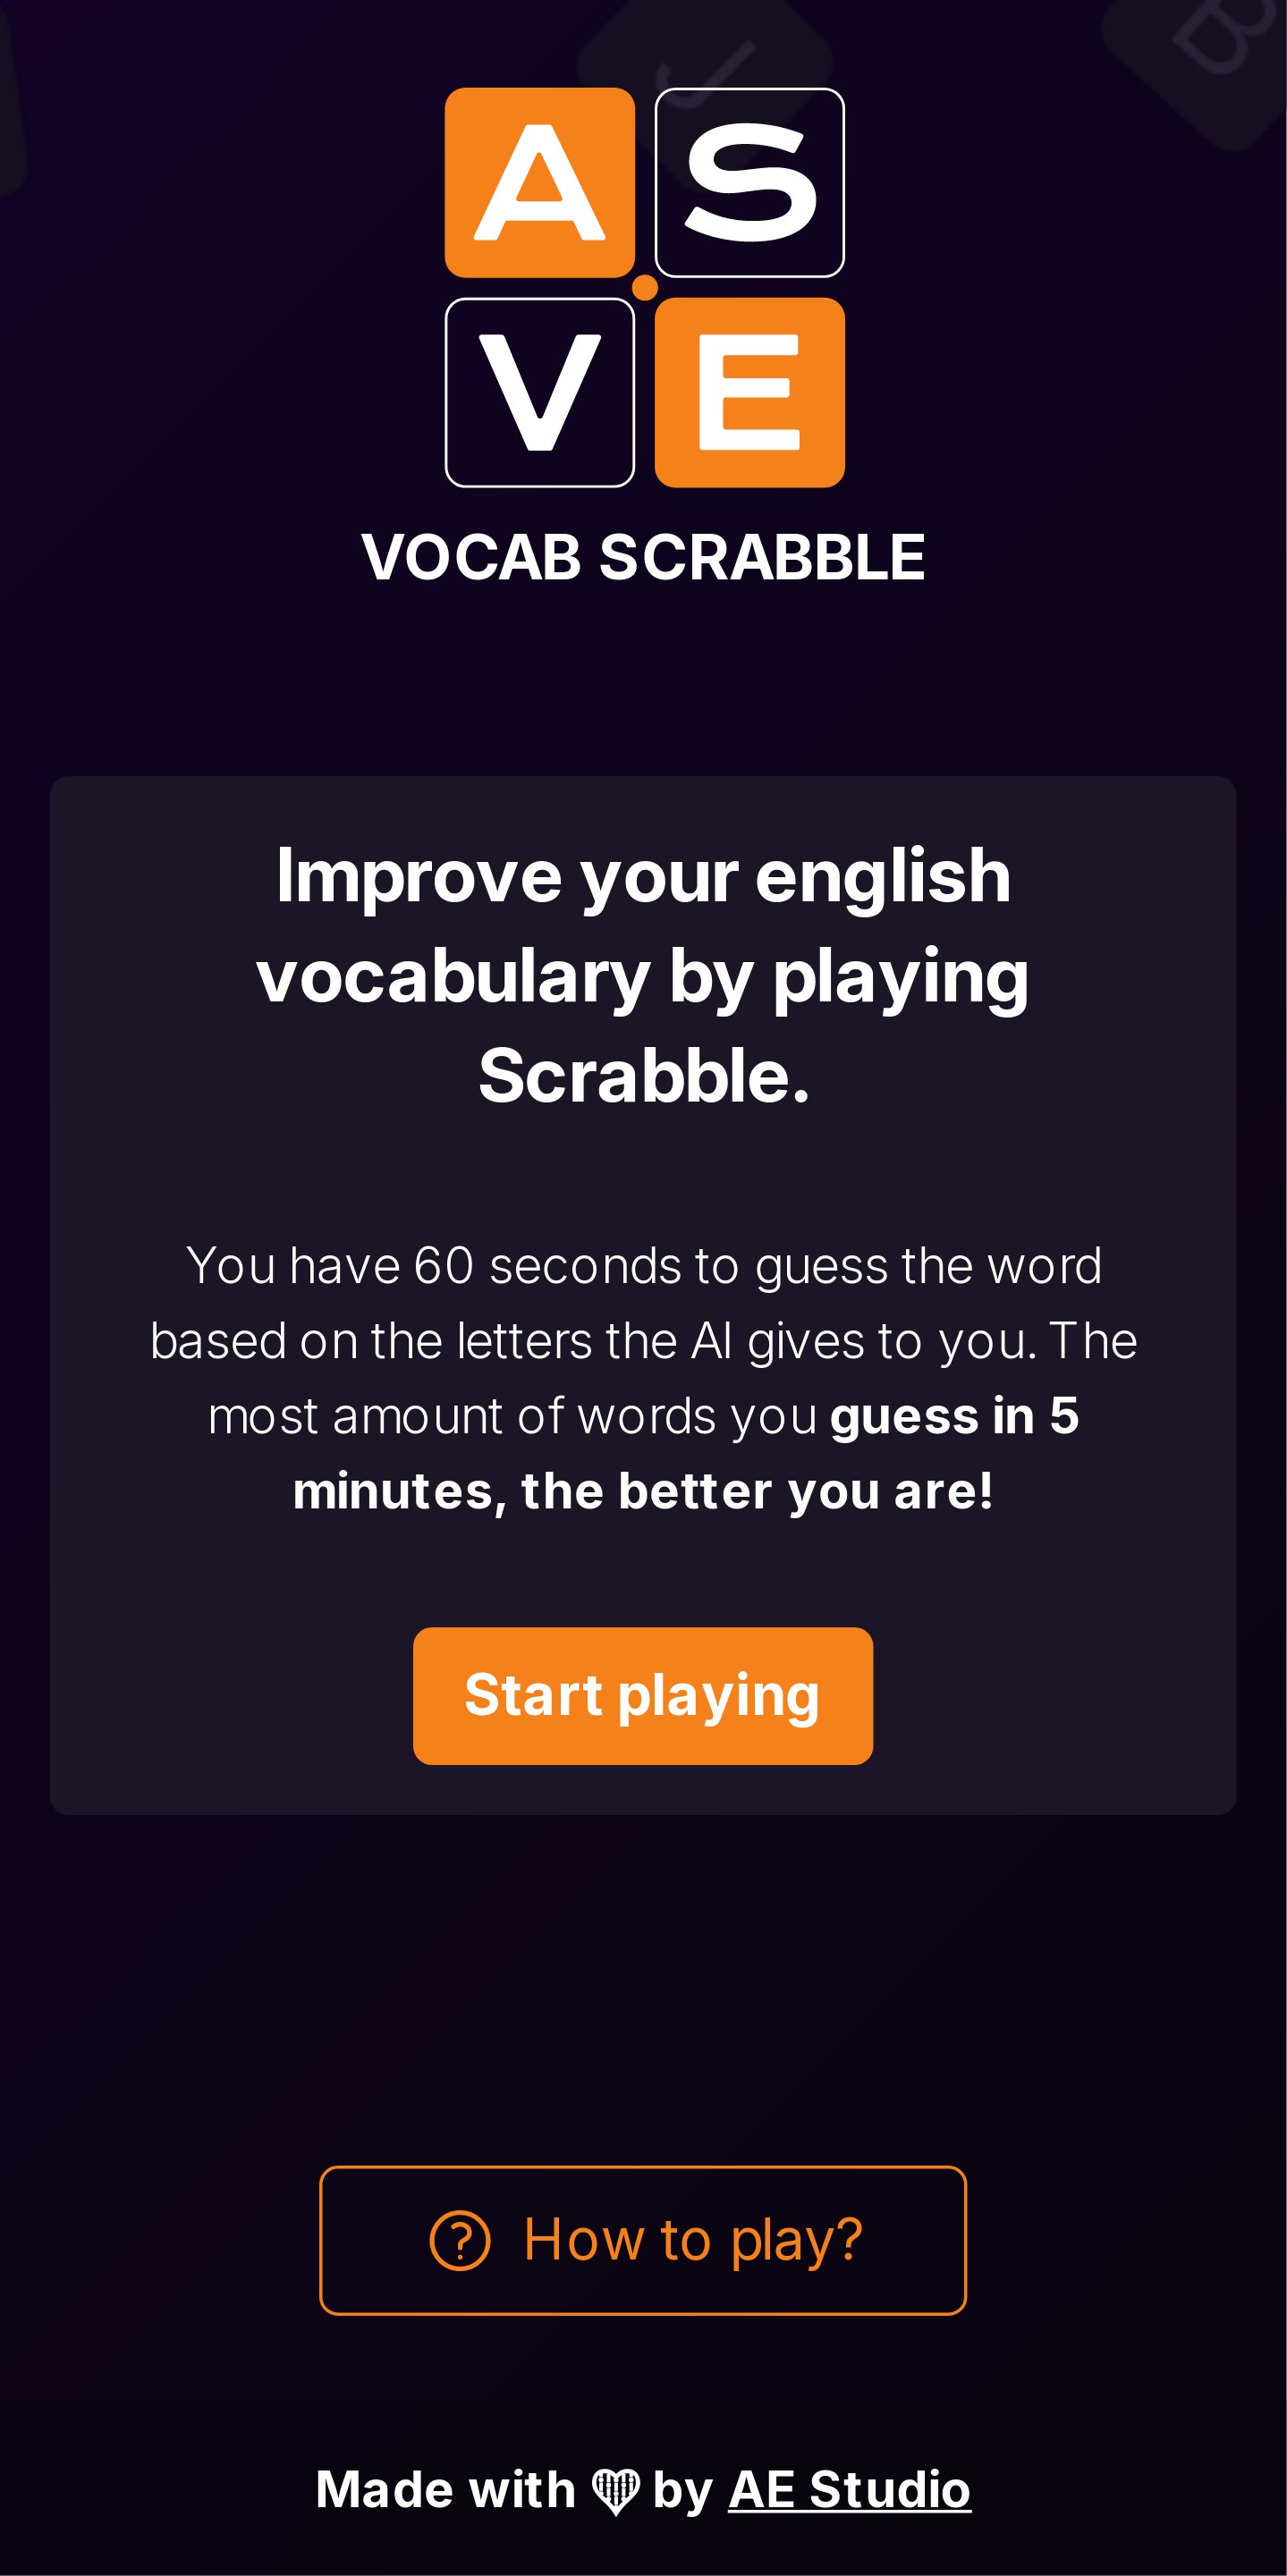 Show HN: Vocab Scrabble – A fun way to increase your vocabulary